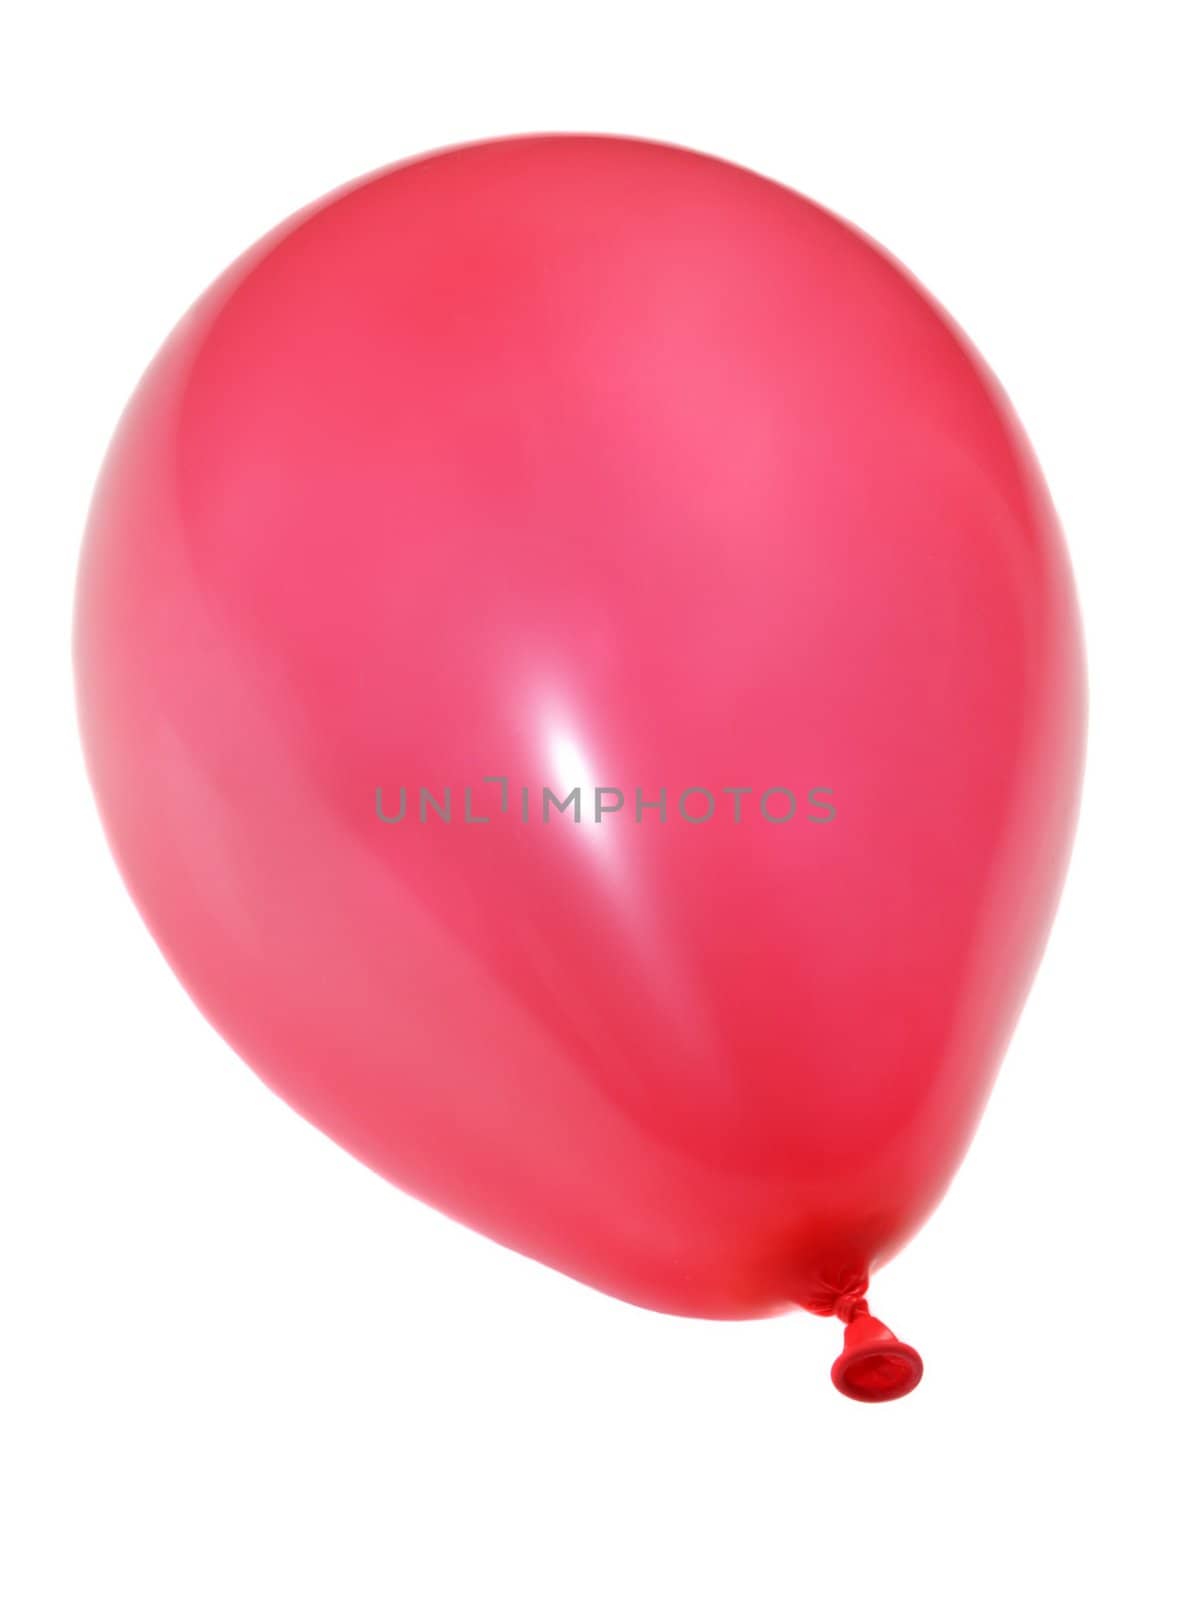 red ballon on white background